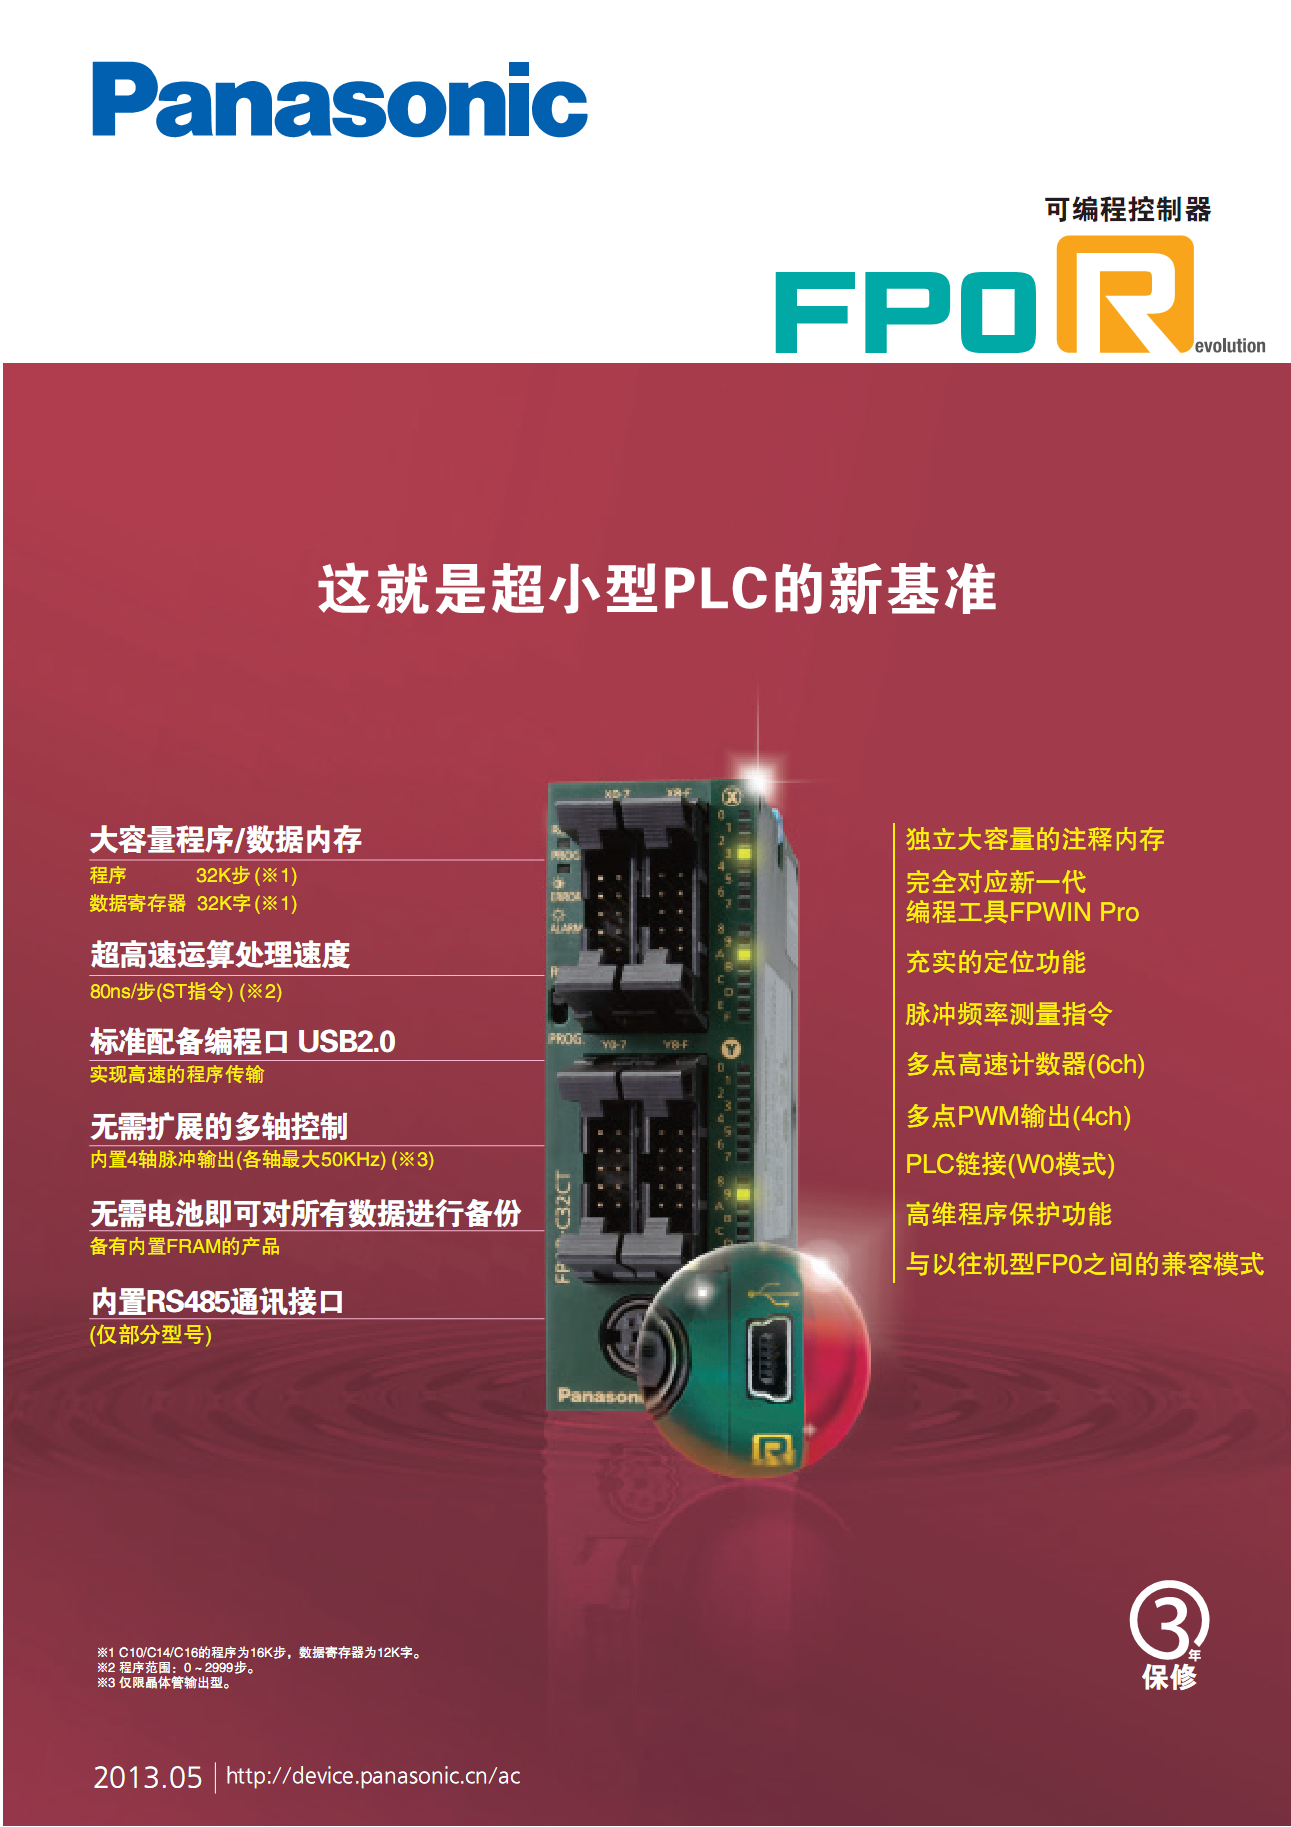 AFP0RC14MRS 可编程控制器 松下PLC,AFP0RC14MRS,超小型PLC,原装松下,可编程控制器